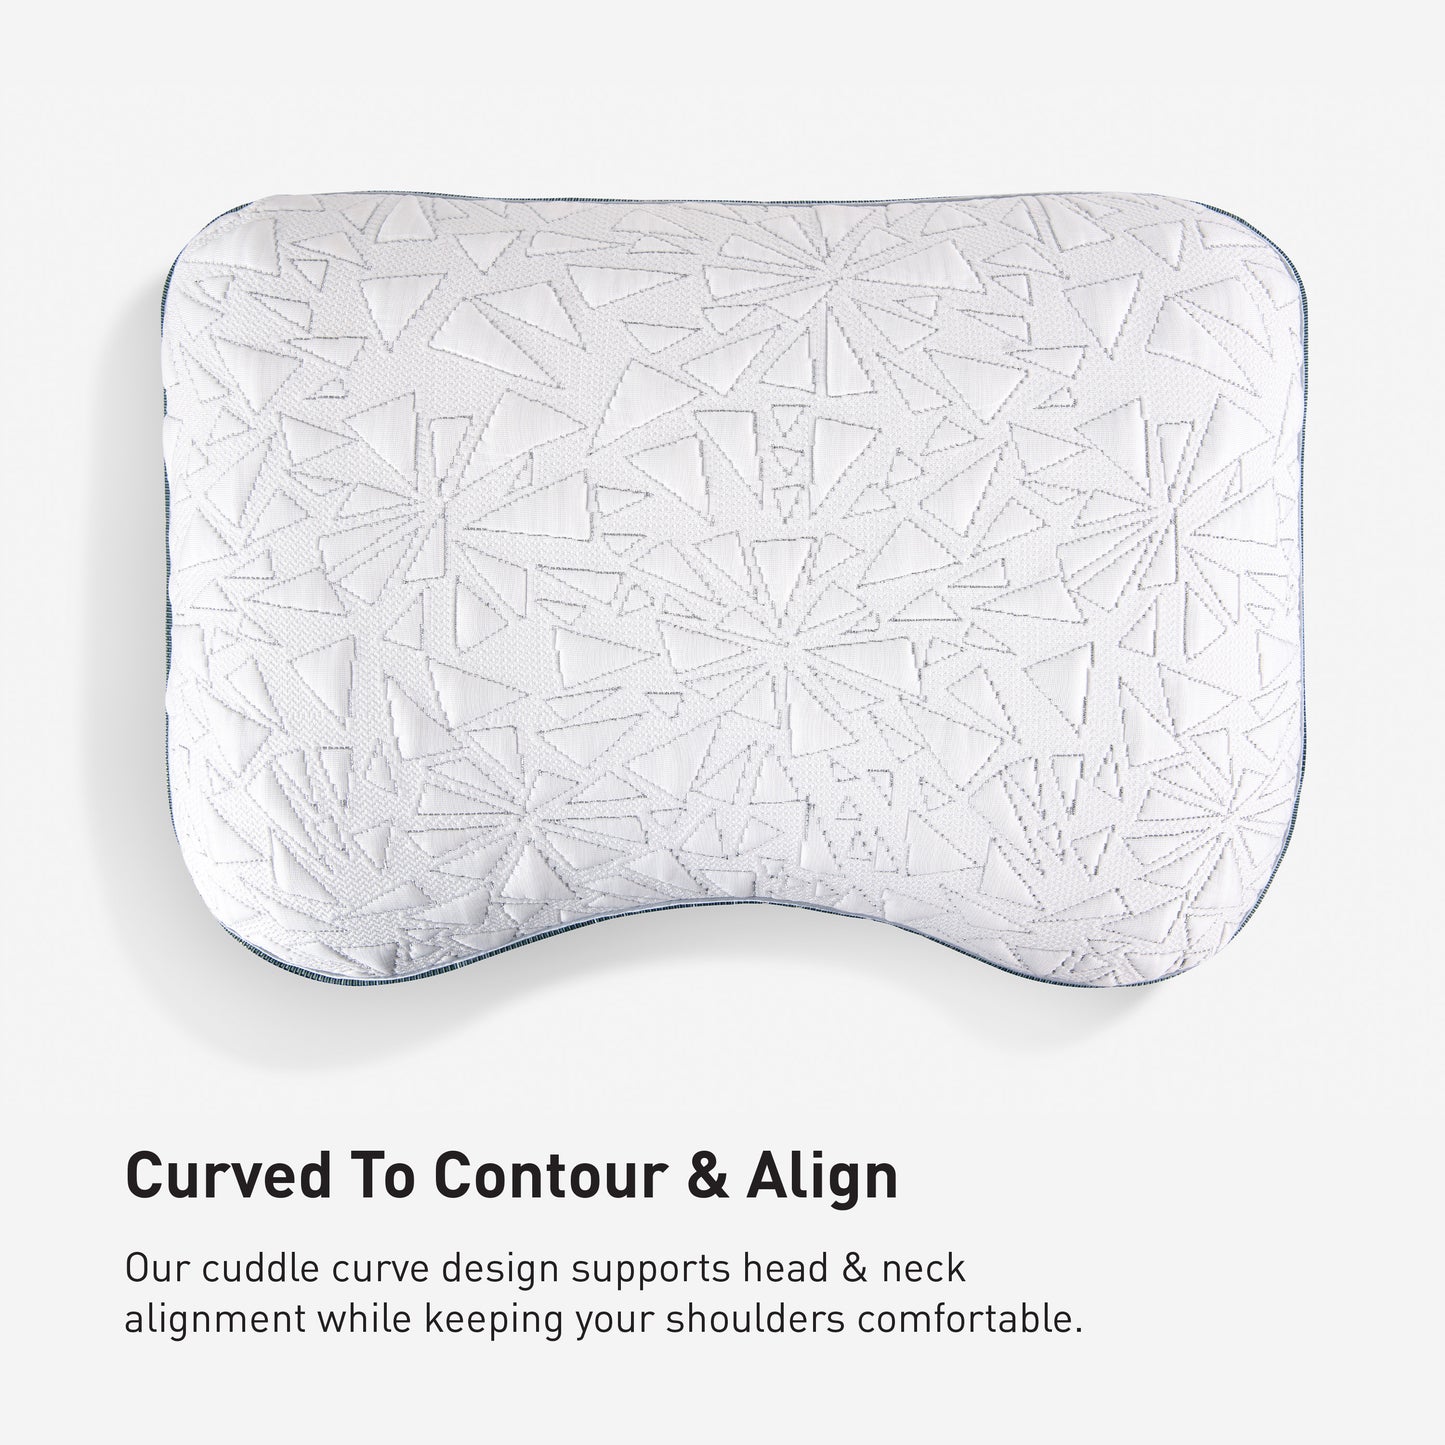 Bedgear Storm Cuddle Curve Performance Pillow - Image 19